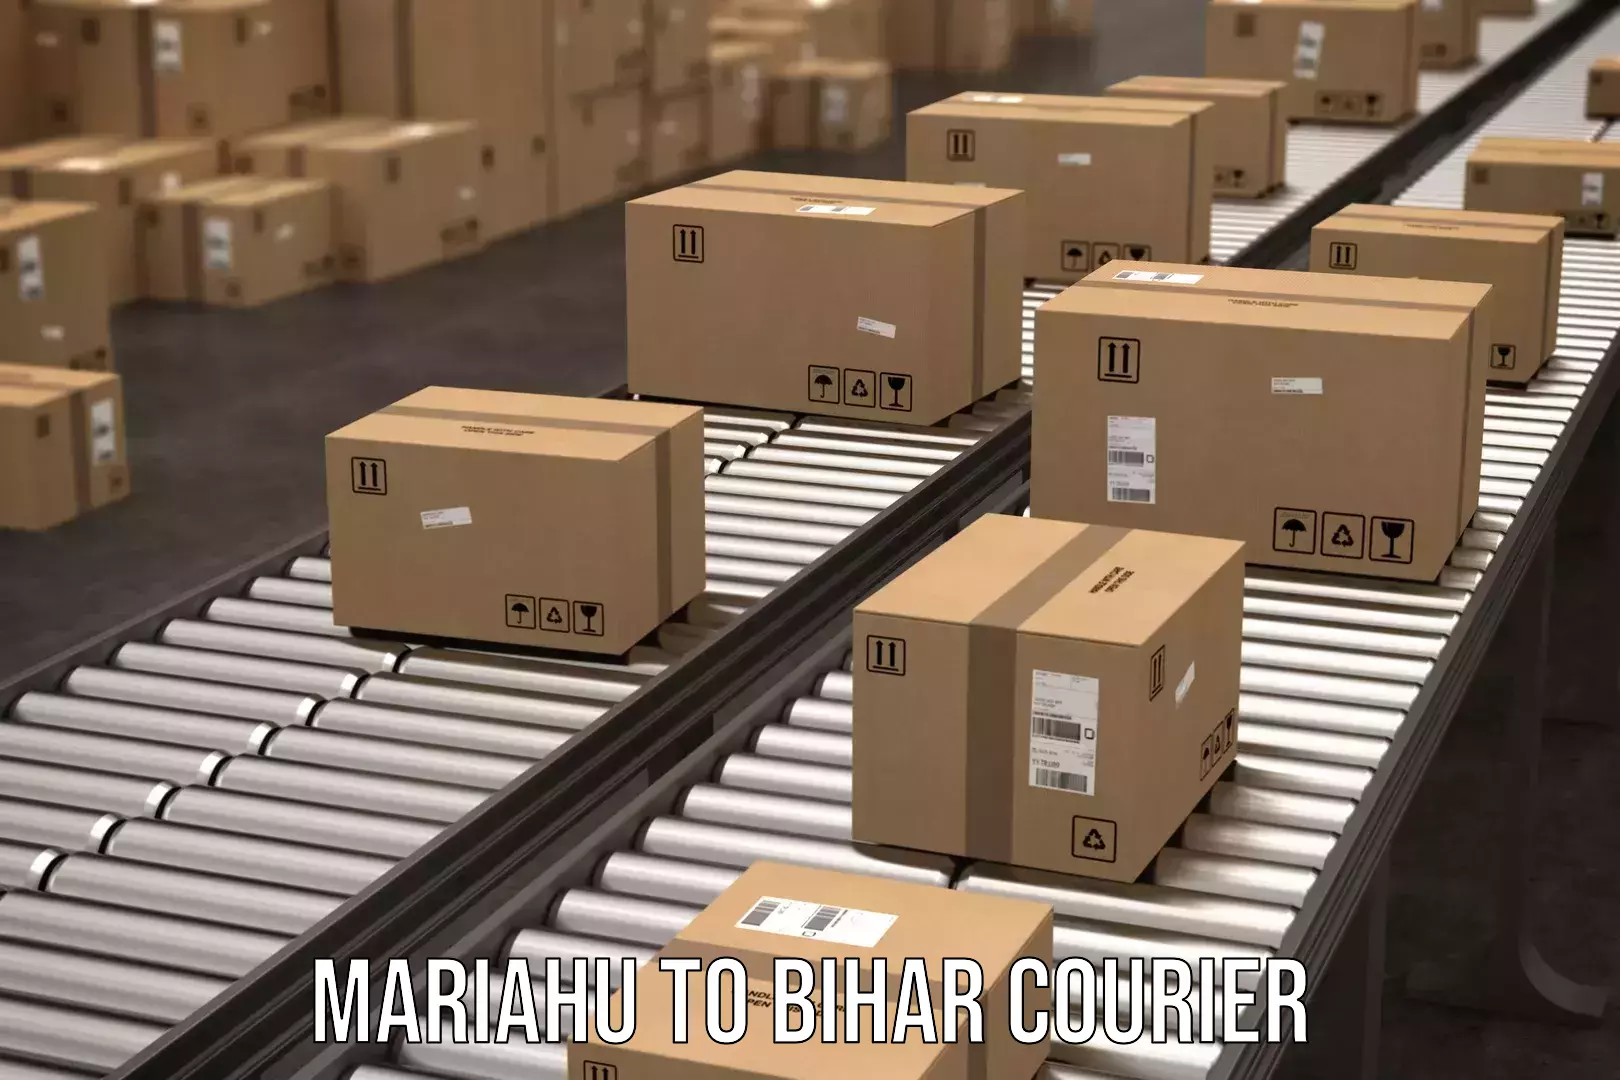 Next-day delivery options Mariahu to Malmaliya